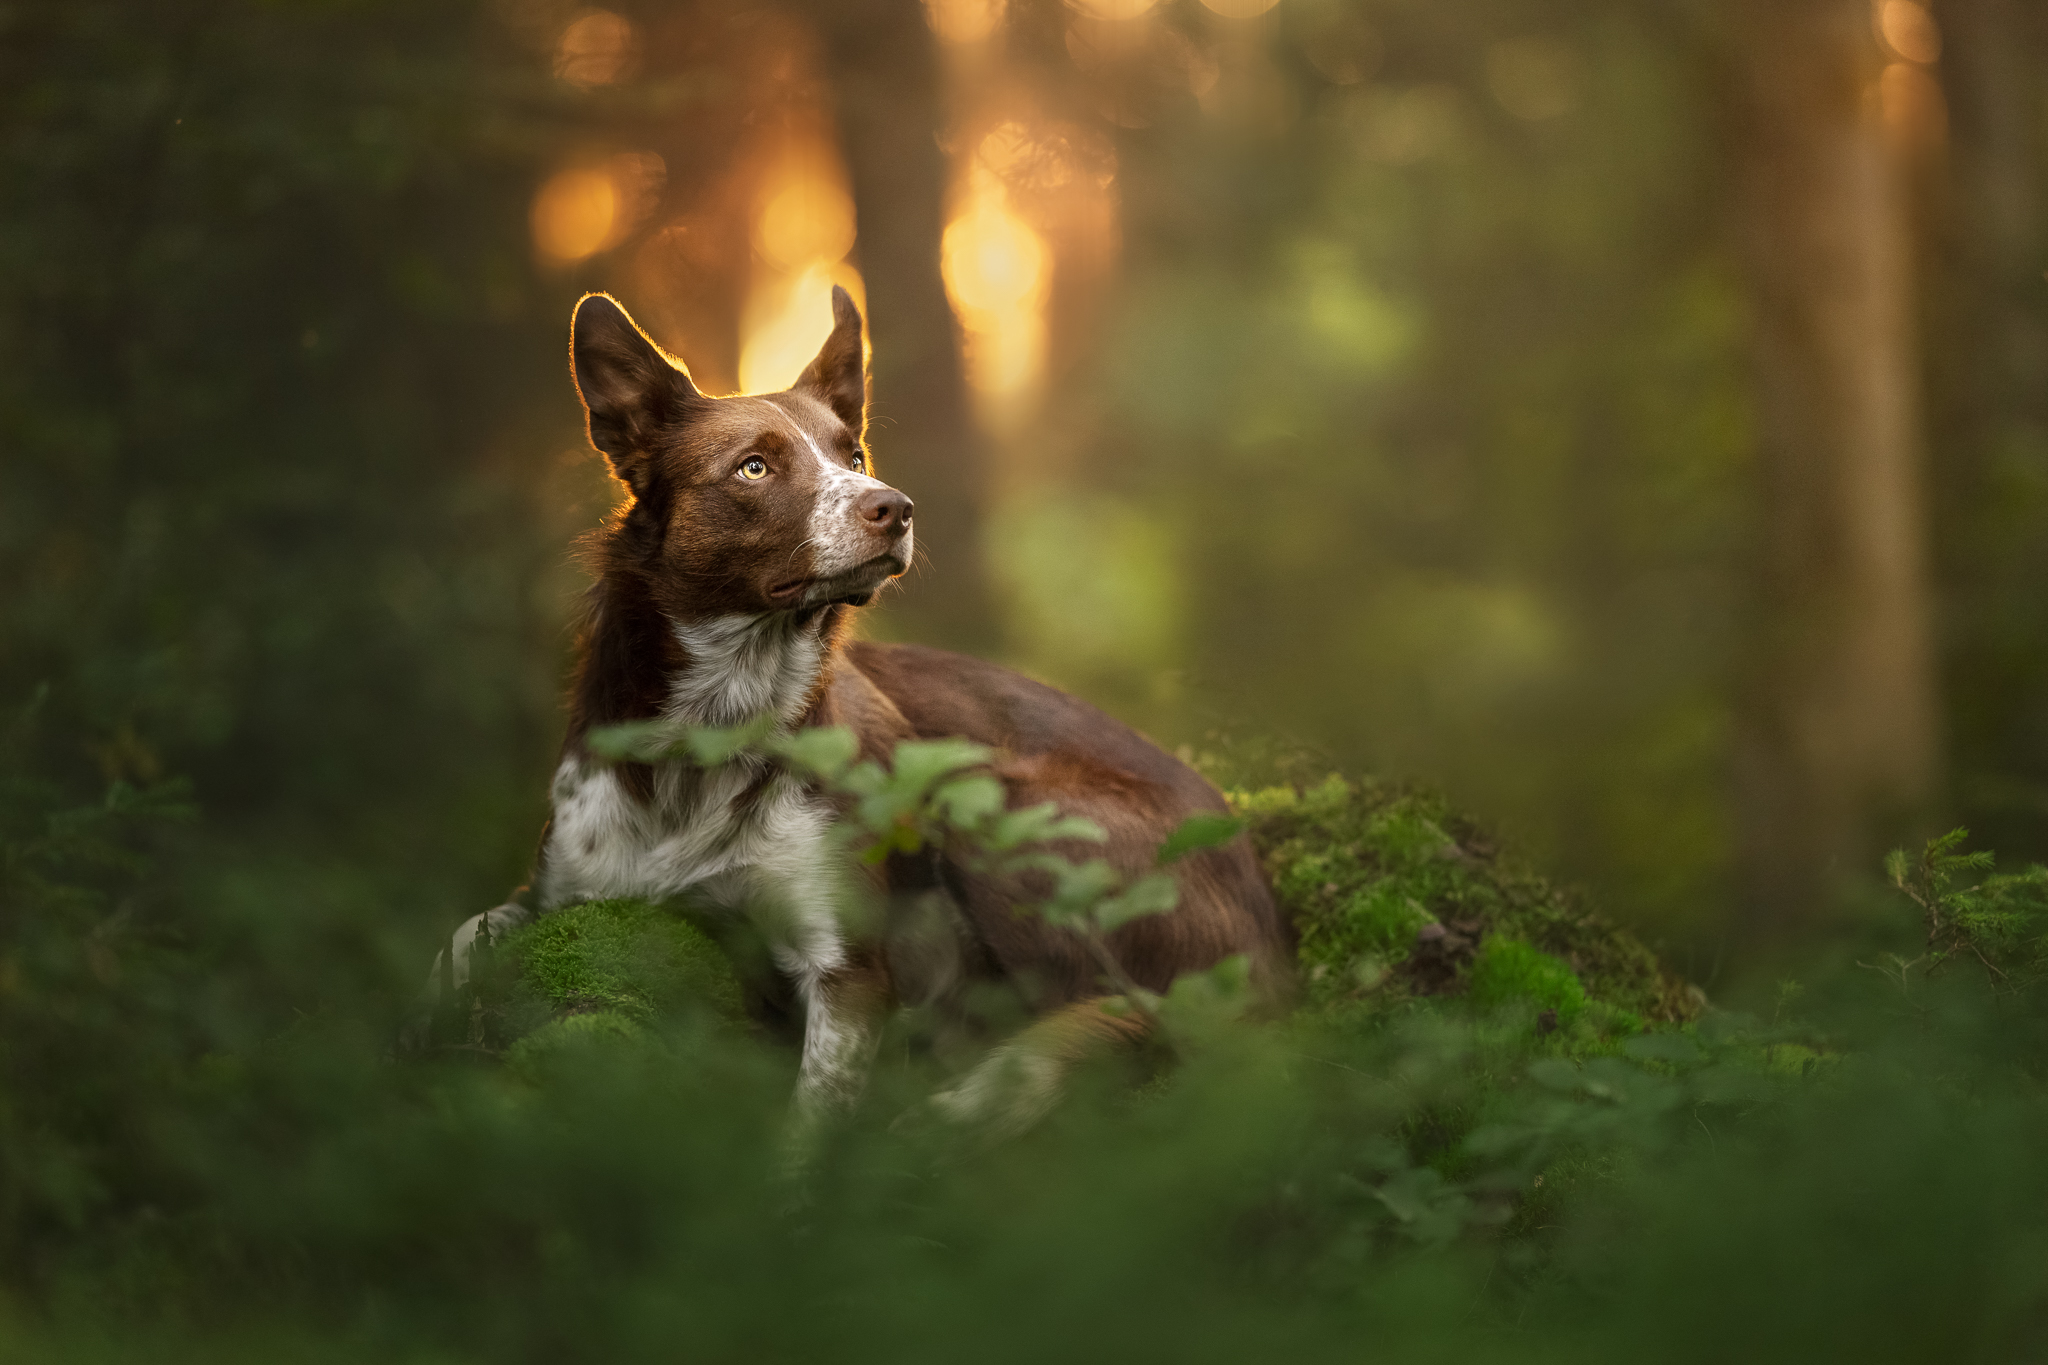 Backlit photo of a brown dog.